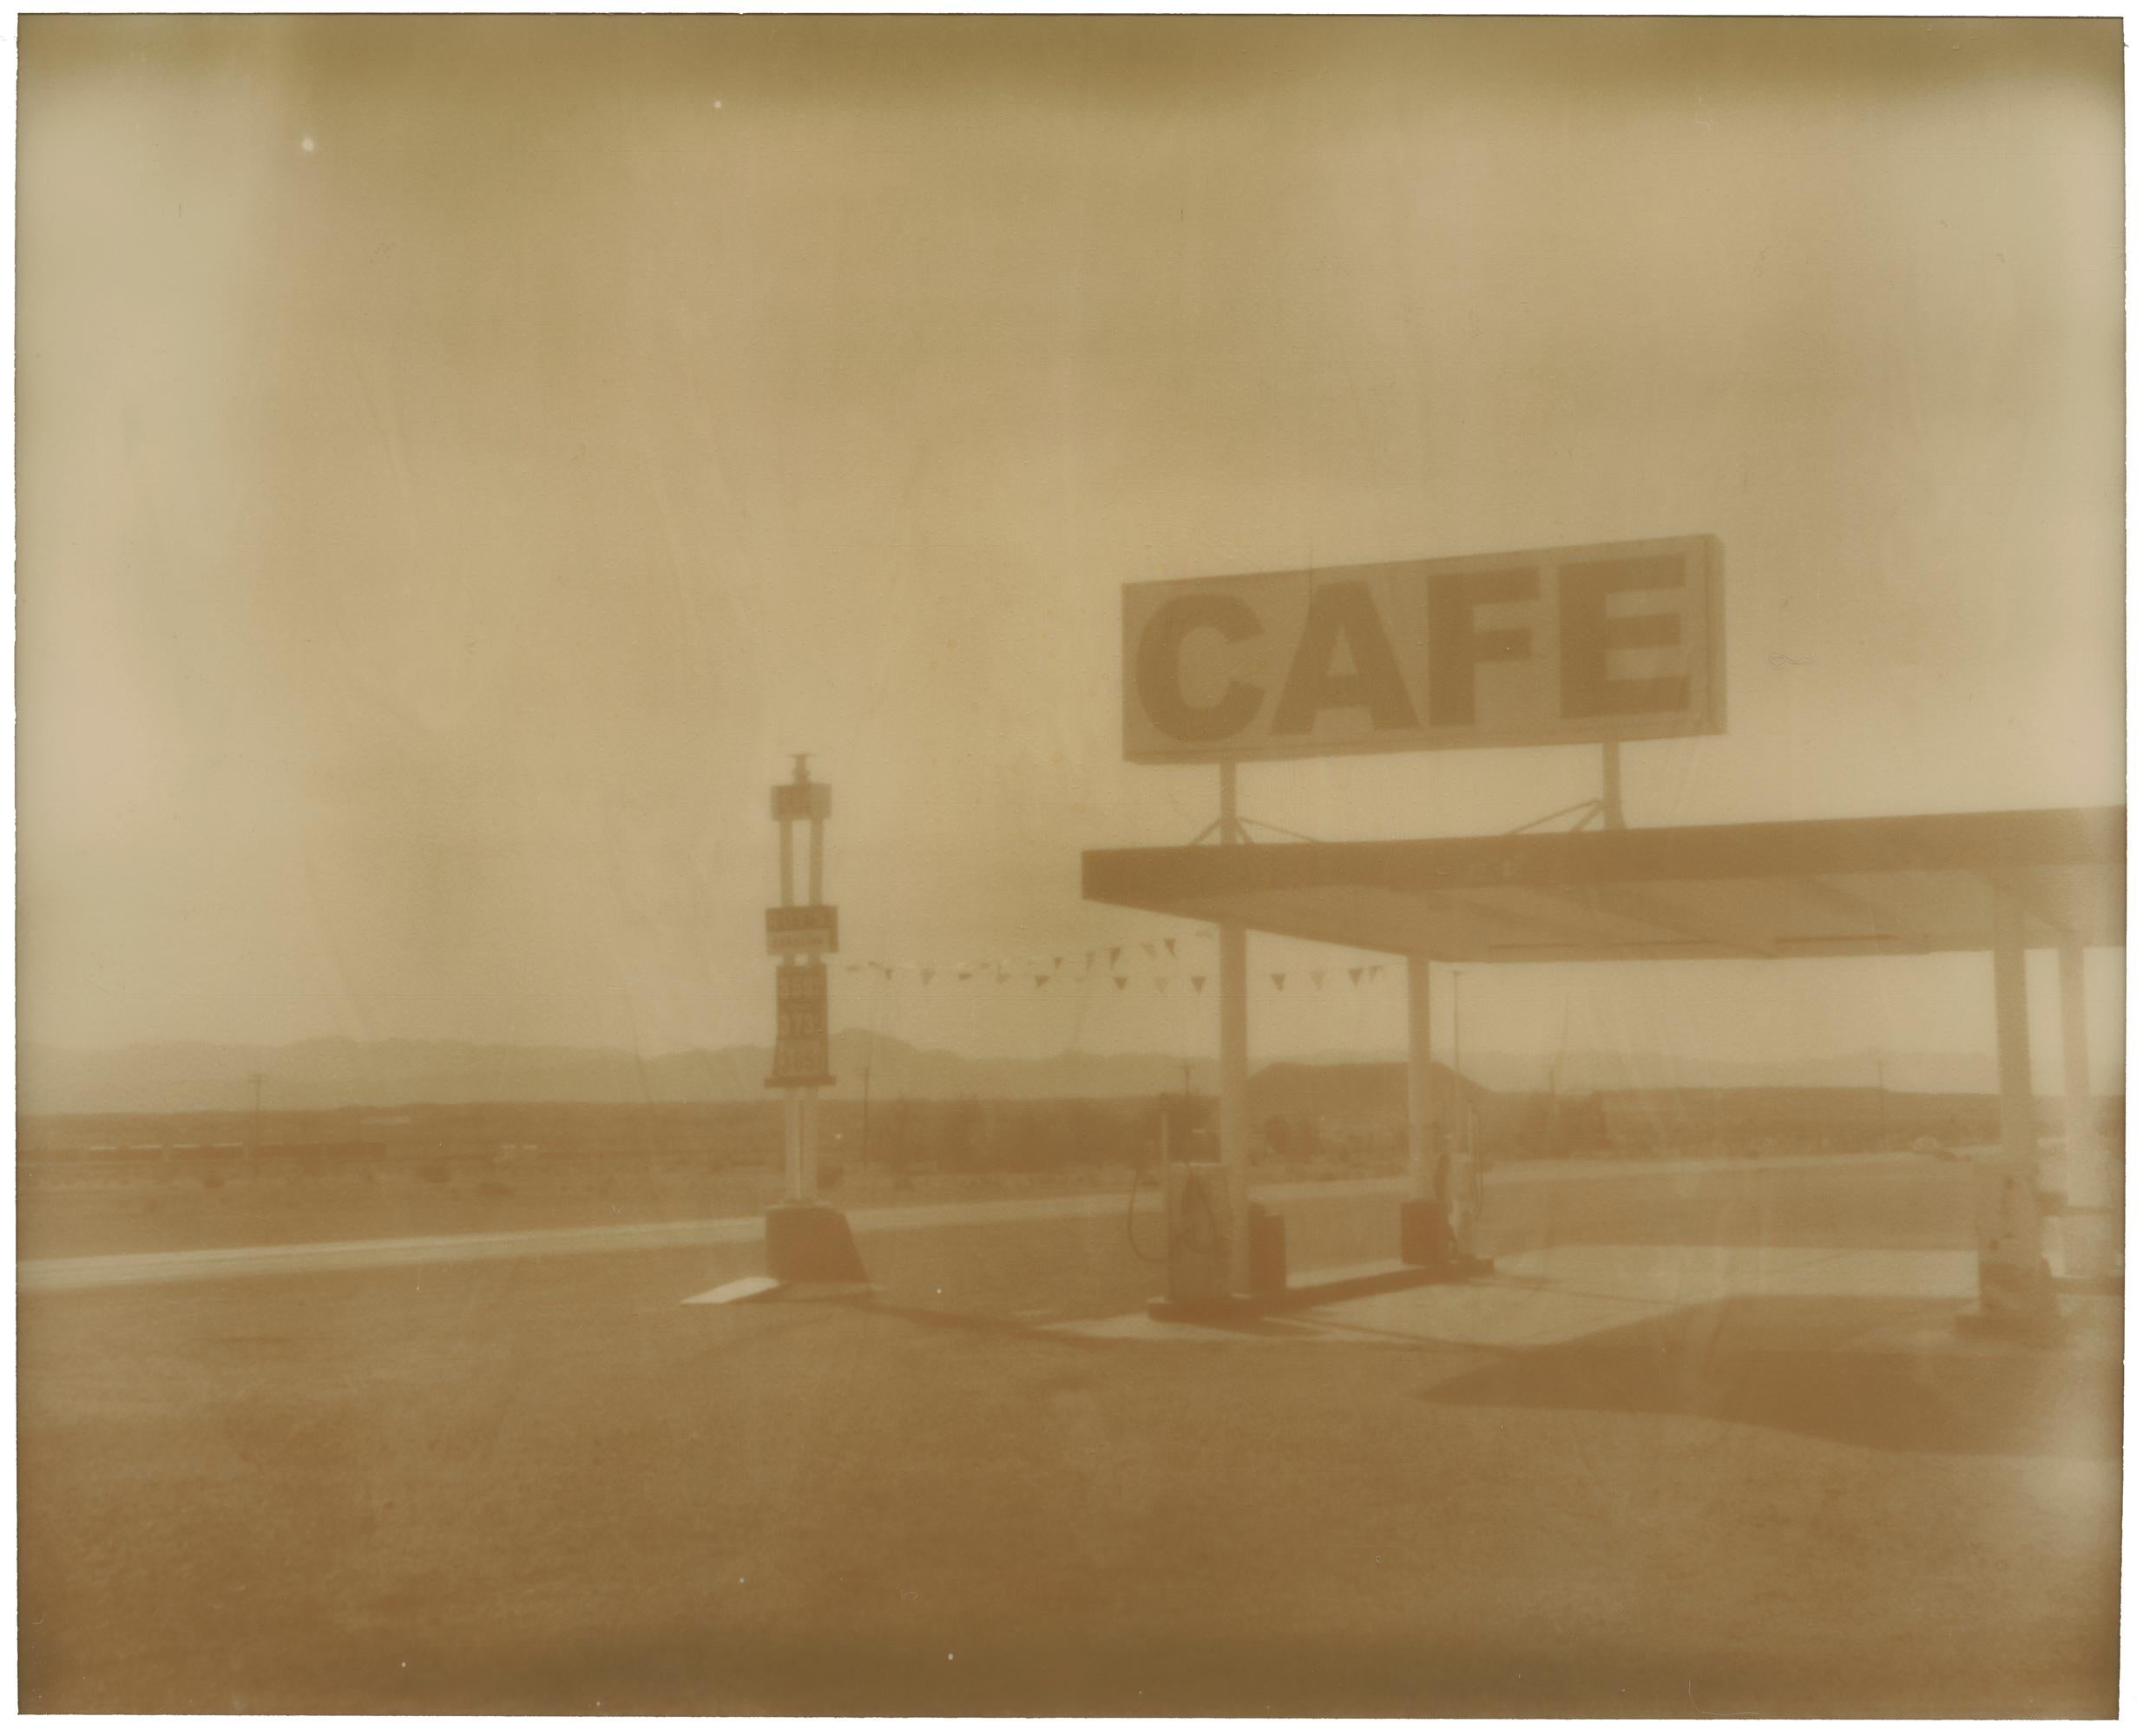 Stefanie Schneider Landscape Photograph - Roy's Cafe (California Badlands) - Contemporary, Polaroid, Landscape